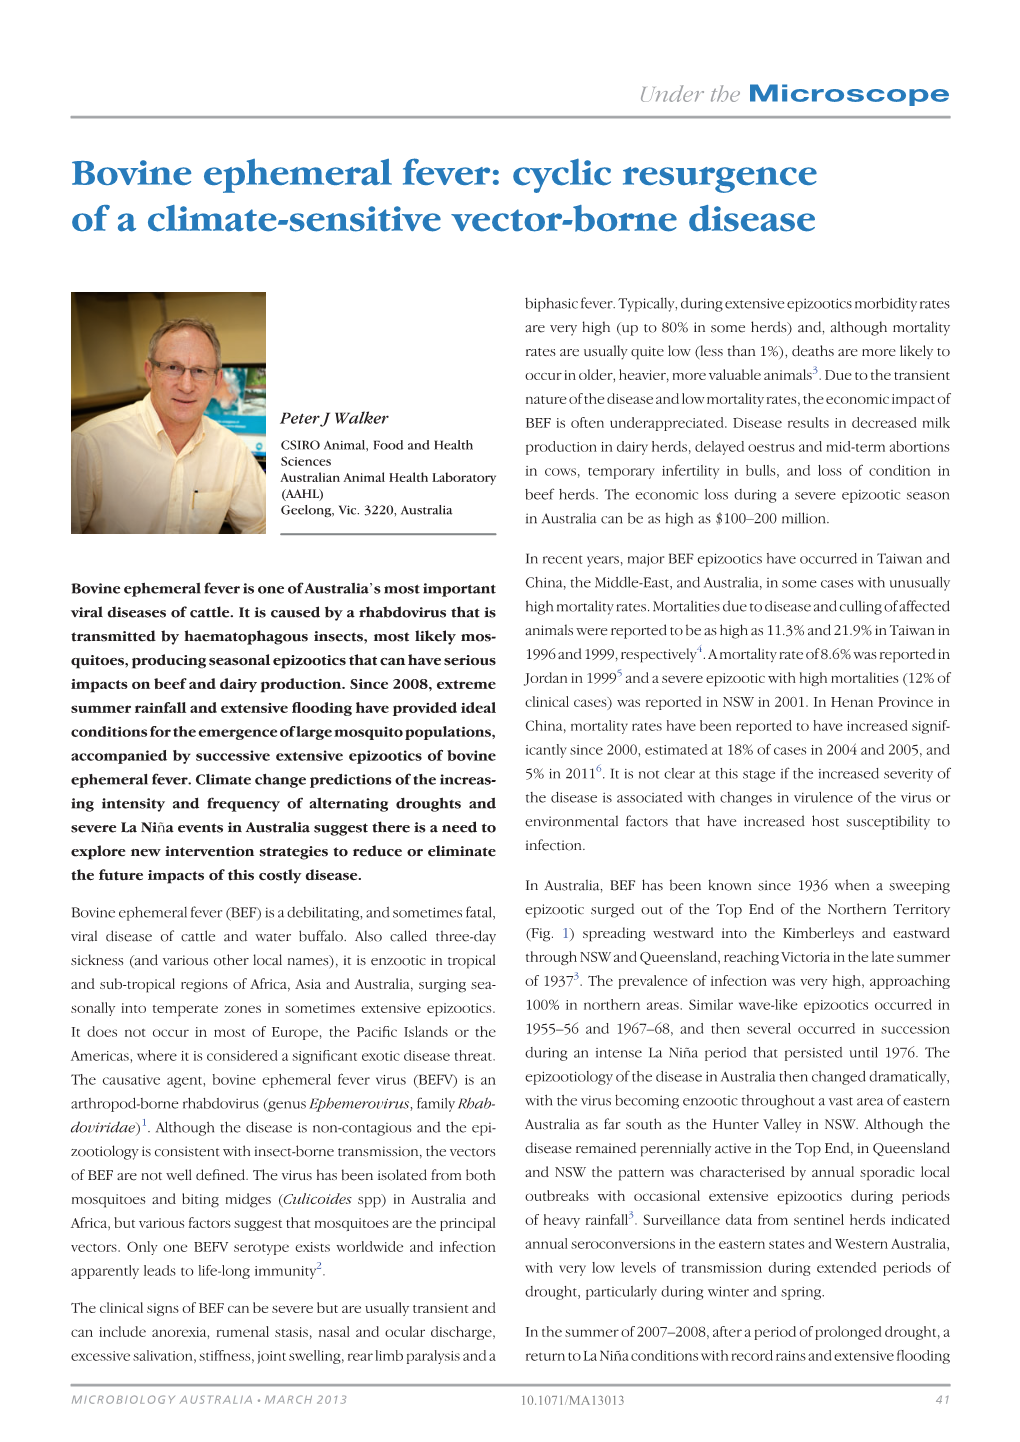 Bovine Ephemeral Fever: Cyclic Resurgence of a Climate-Sensitive Vector-Borne Disease